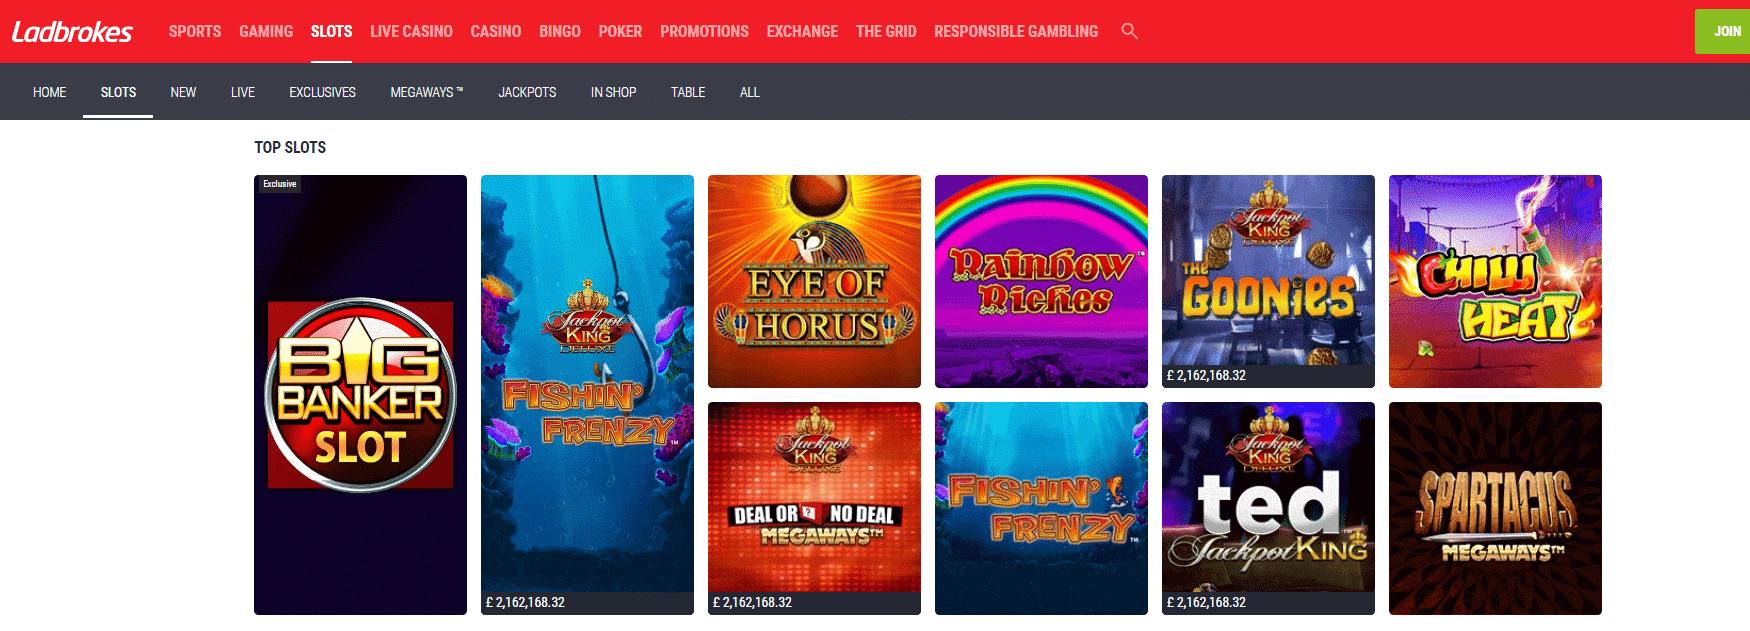 Ladbrokes Online Casino review - Slot Games